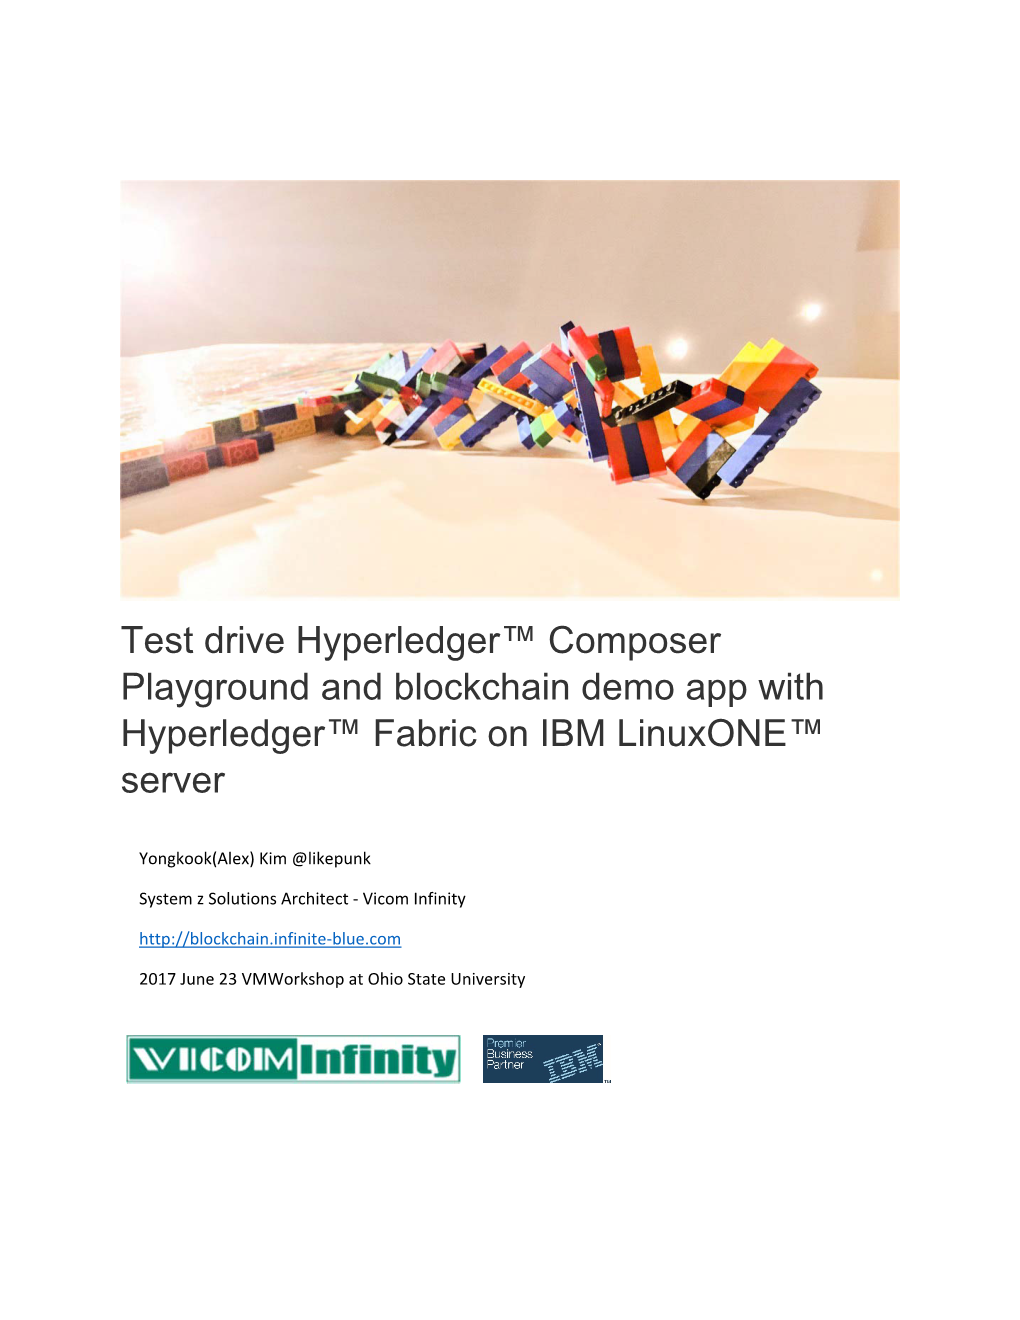 Test Drive Hyperledger™ Composer Playground and Blockchain Demo App with Hyperledger™ Fabric on IBM Linuxone™ Server